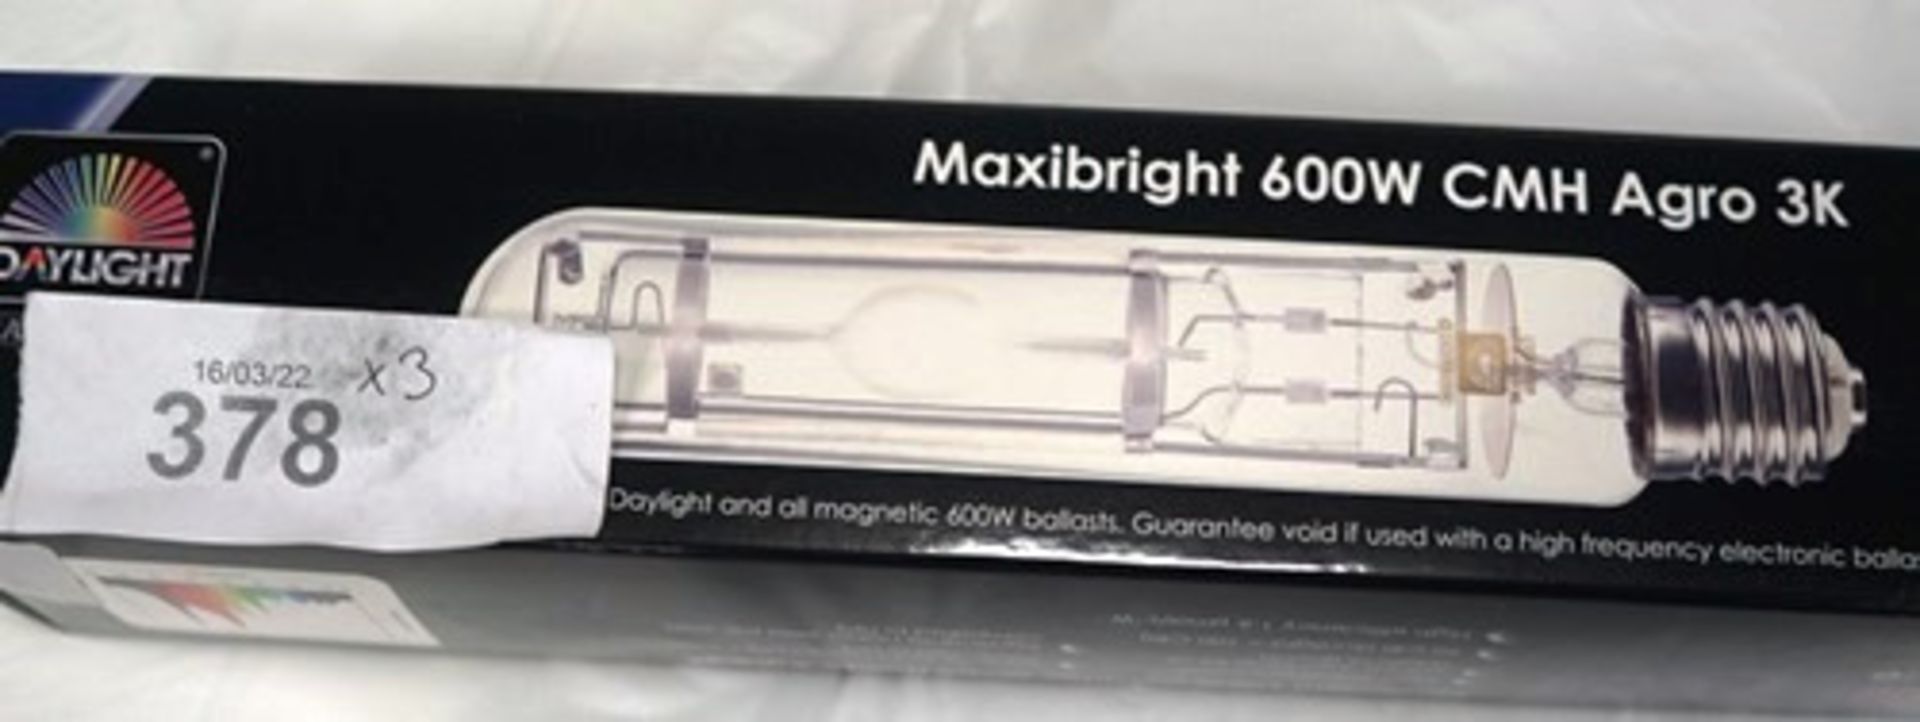 3 x MaxiBright 600W CMH ARGO 3K daylight plant growing lights - New in box (C14D)